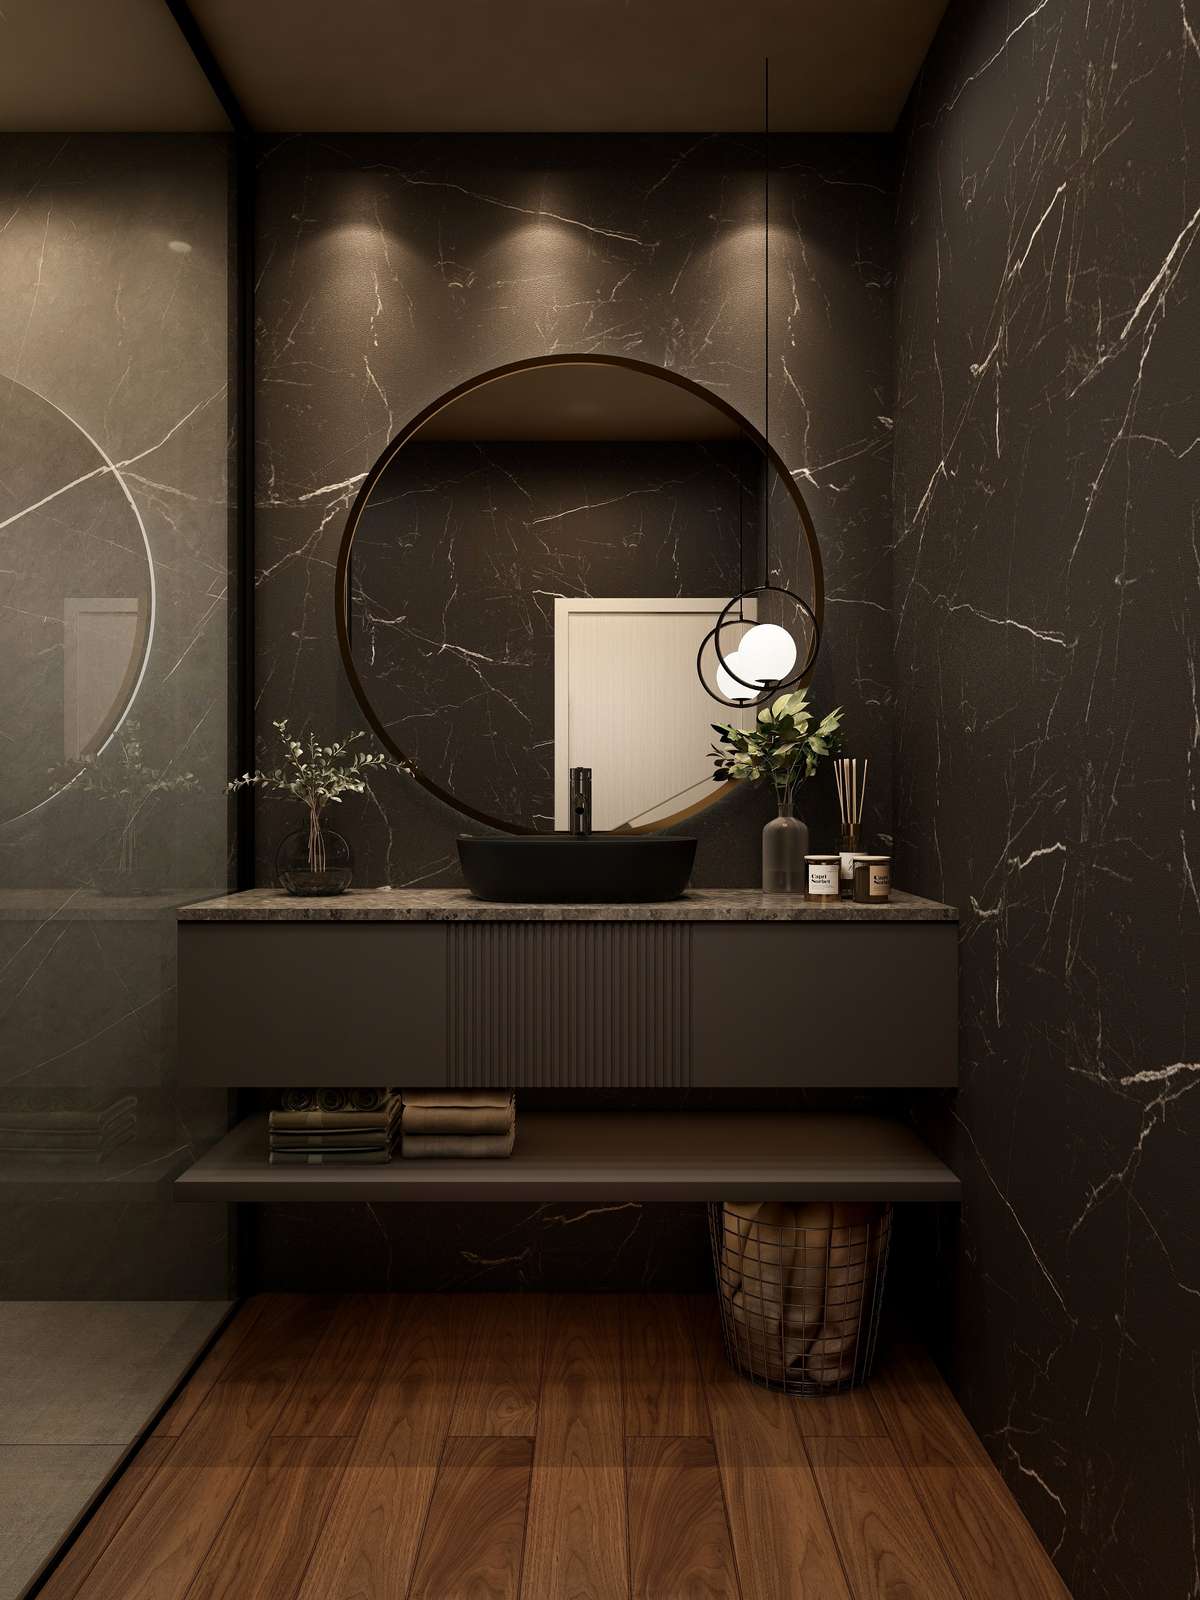 Modern washrooms ✨
#koloapp #washroomdesign #Architectural&Interior #InteriorDesigner #visualization #HomeDecor